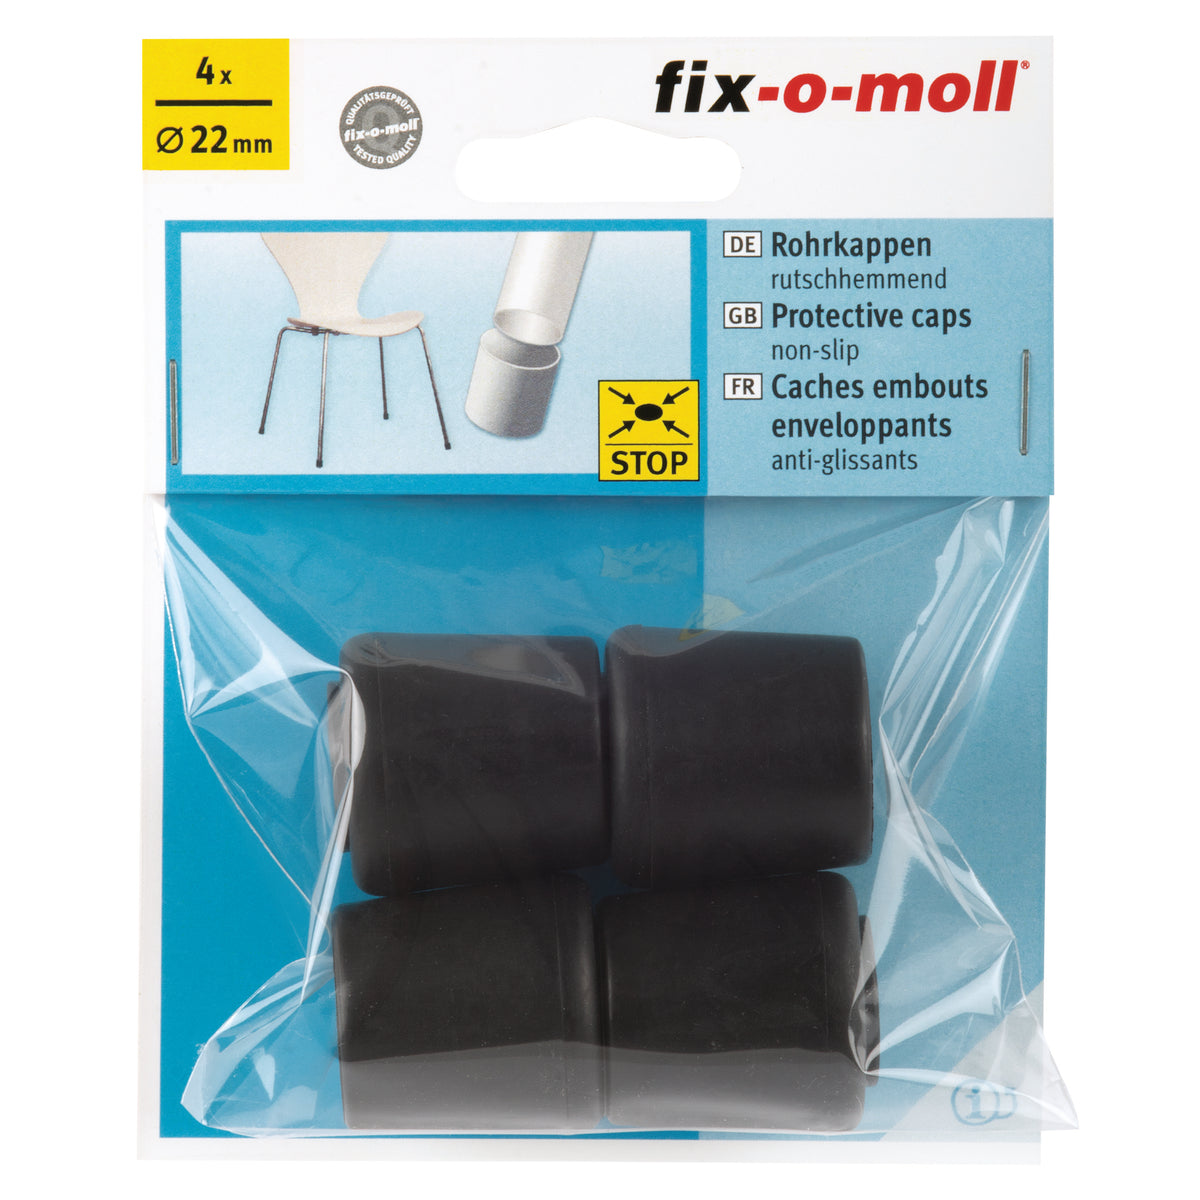 Fix-O-Moll anti-slip pootdoppen zwart 22mm 4 st